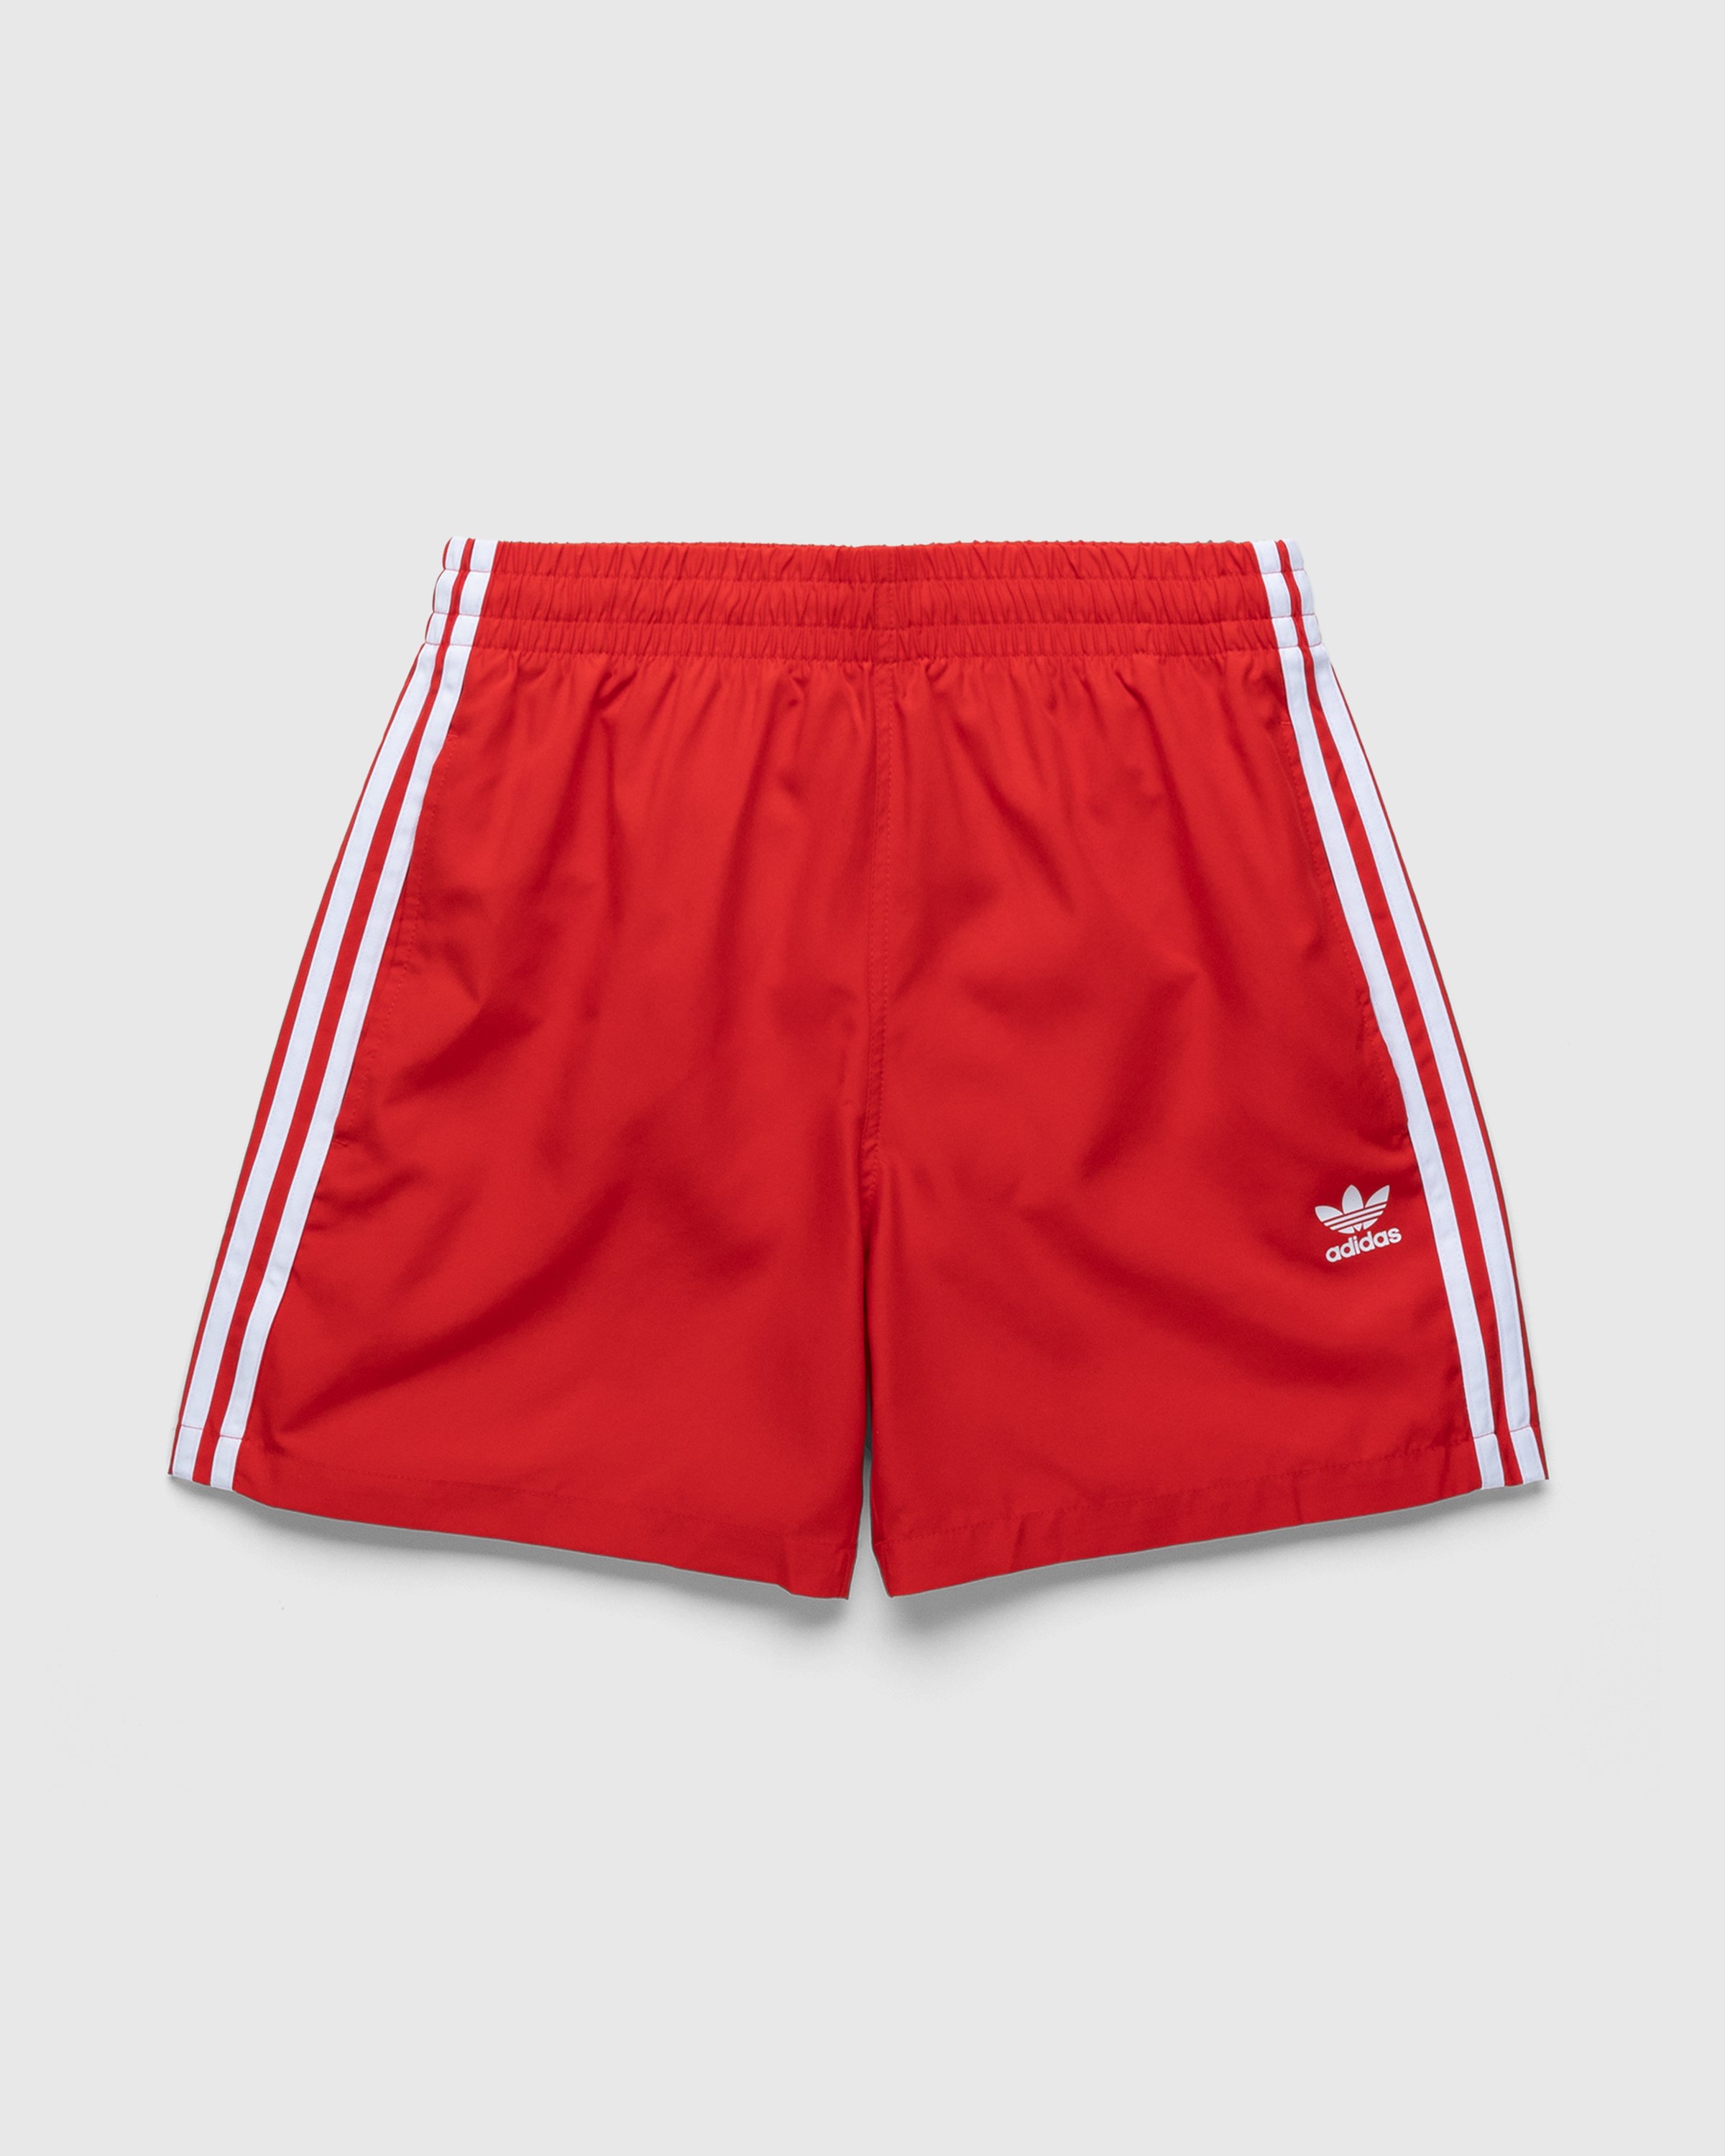 Adidas - Classic 3-Stripes Swim Shorts Vivid Red - Clothing - Red - Image 1